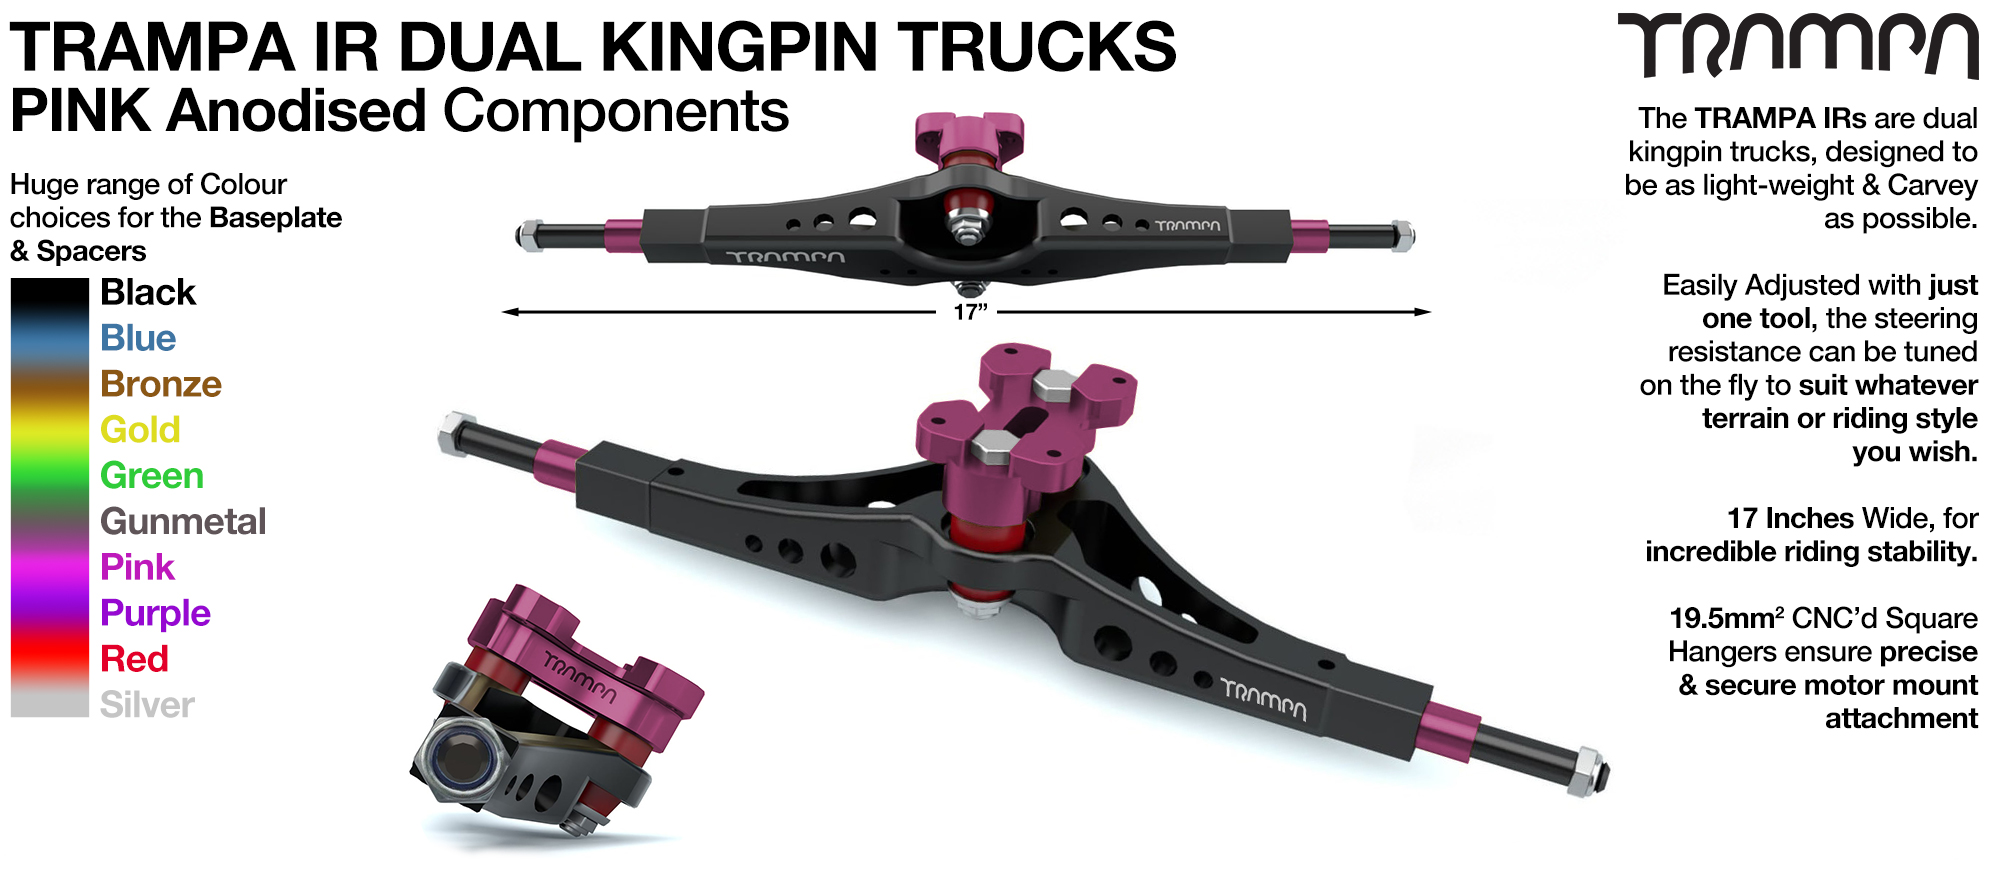 TRAMPA IR Double Kingpinned Skate Style Trucks fit every 19.1mm Motor Mount TRAMPA offers - PINK